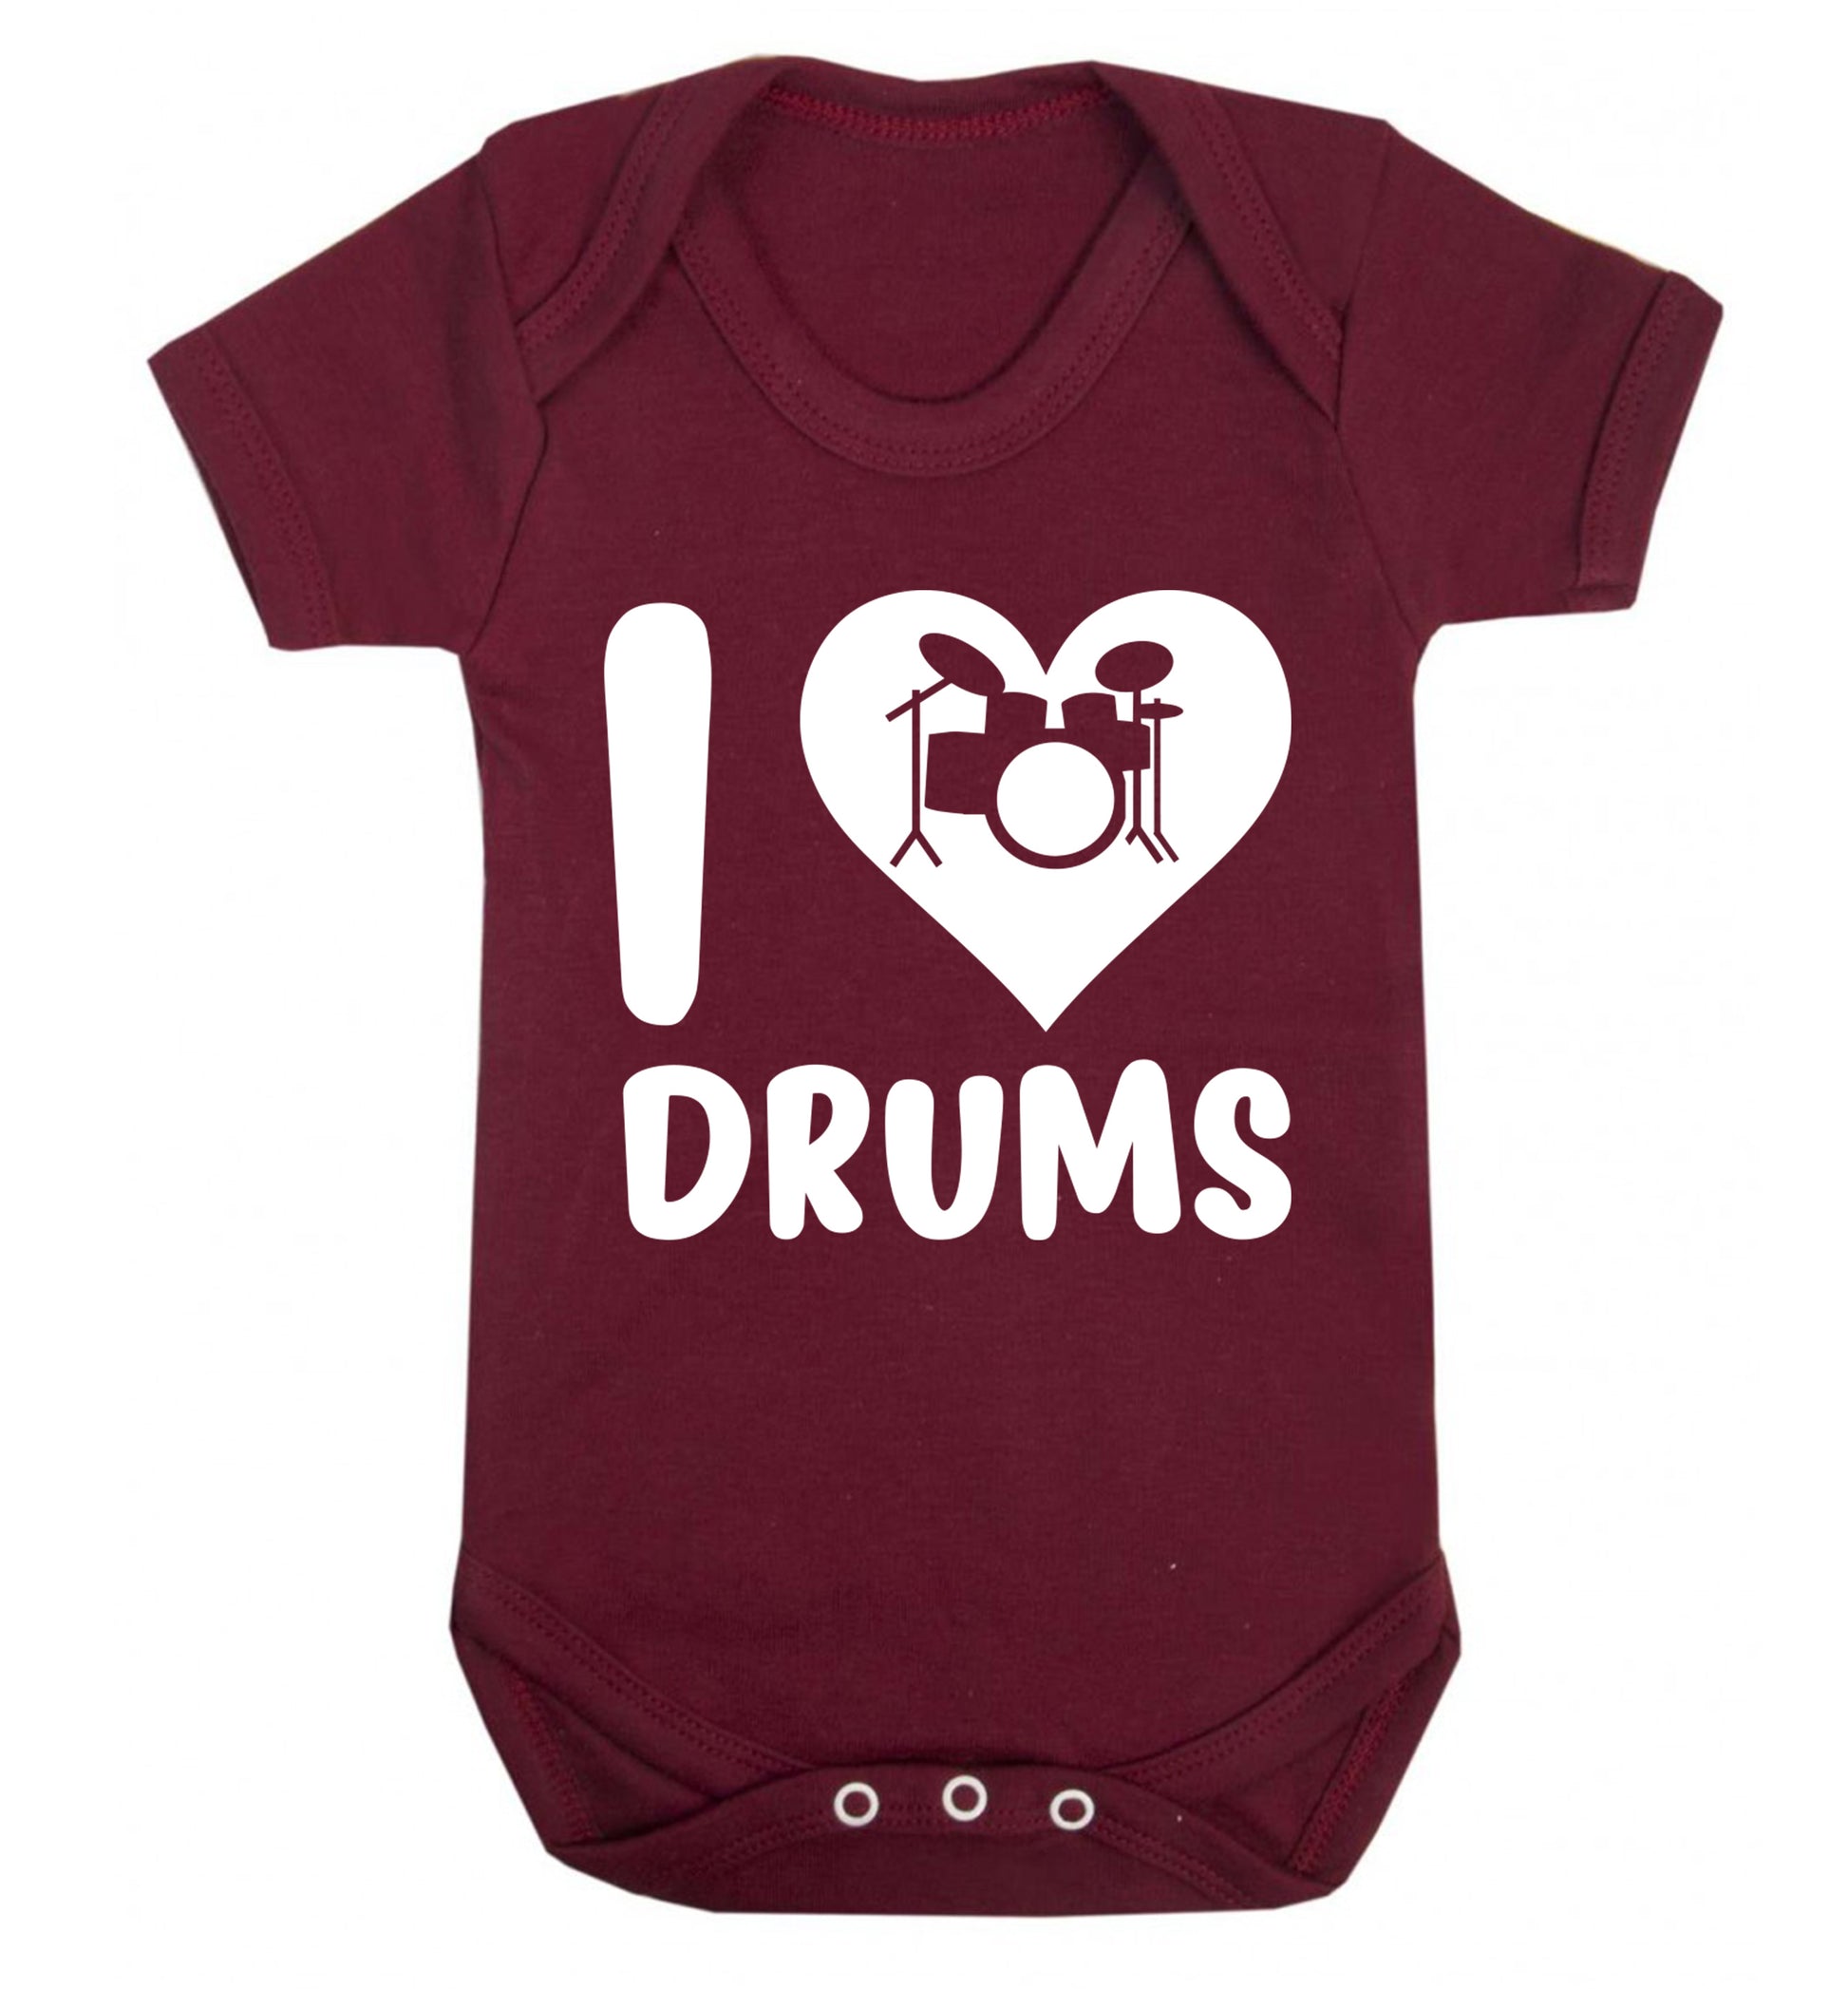 I love drums Baby Vest maroon 18-24 months